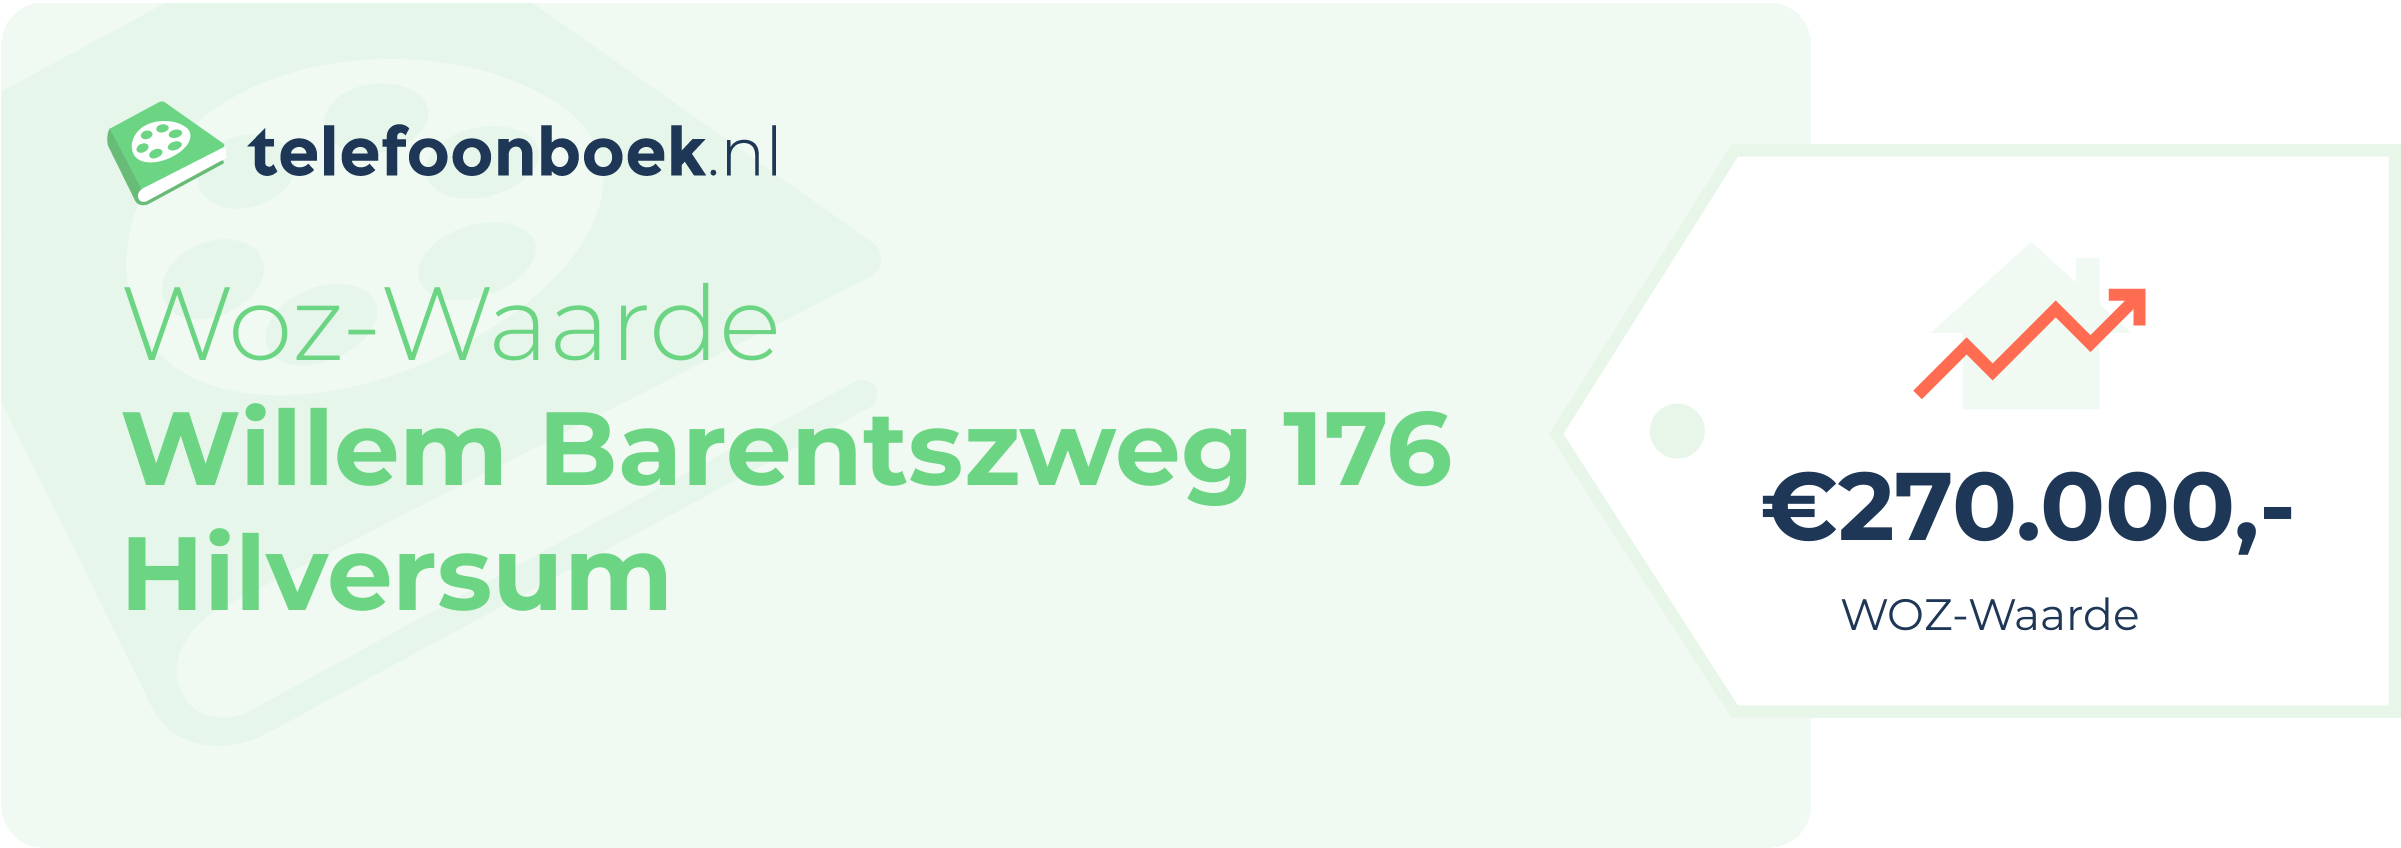 WOZ-waarde Willem Barentszweg 176 Hilversum